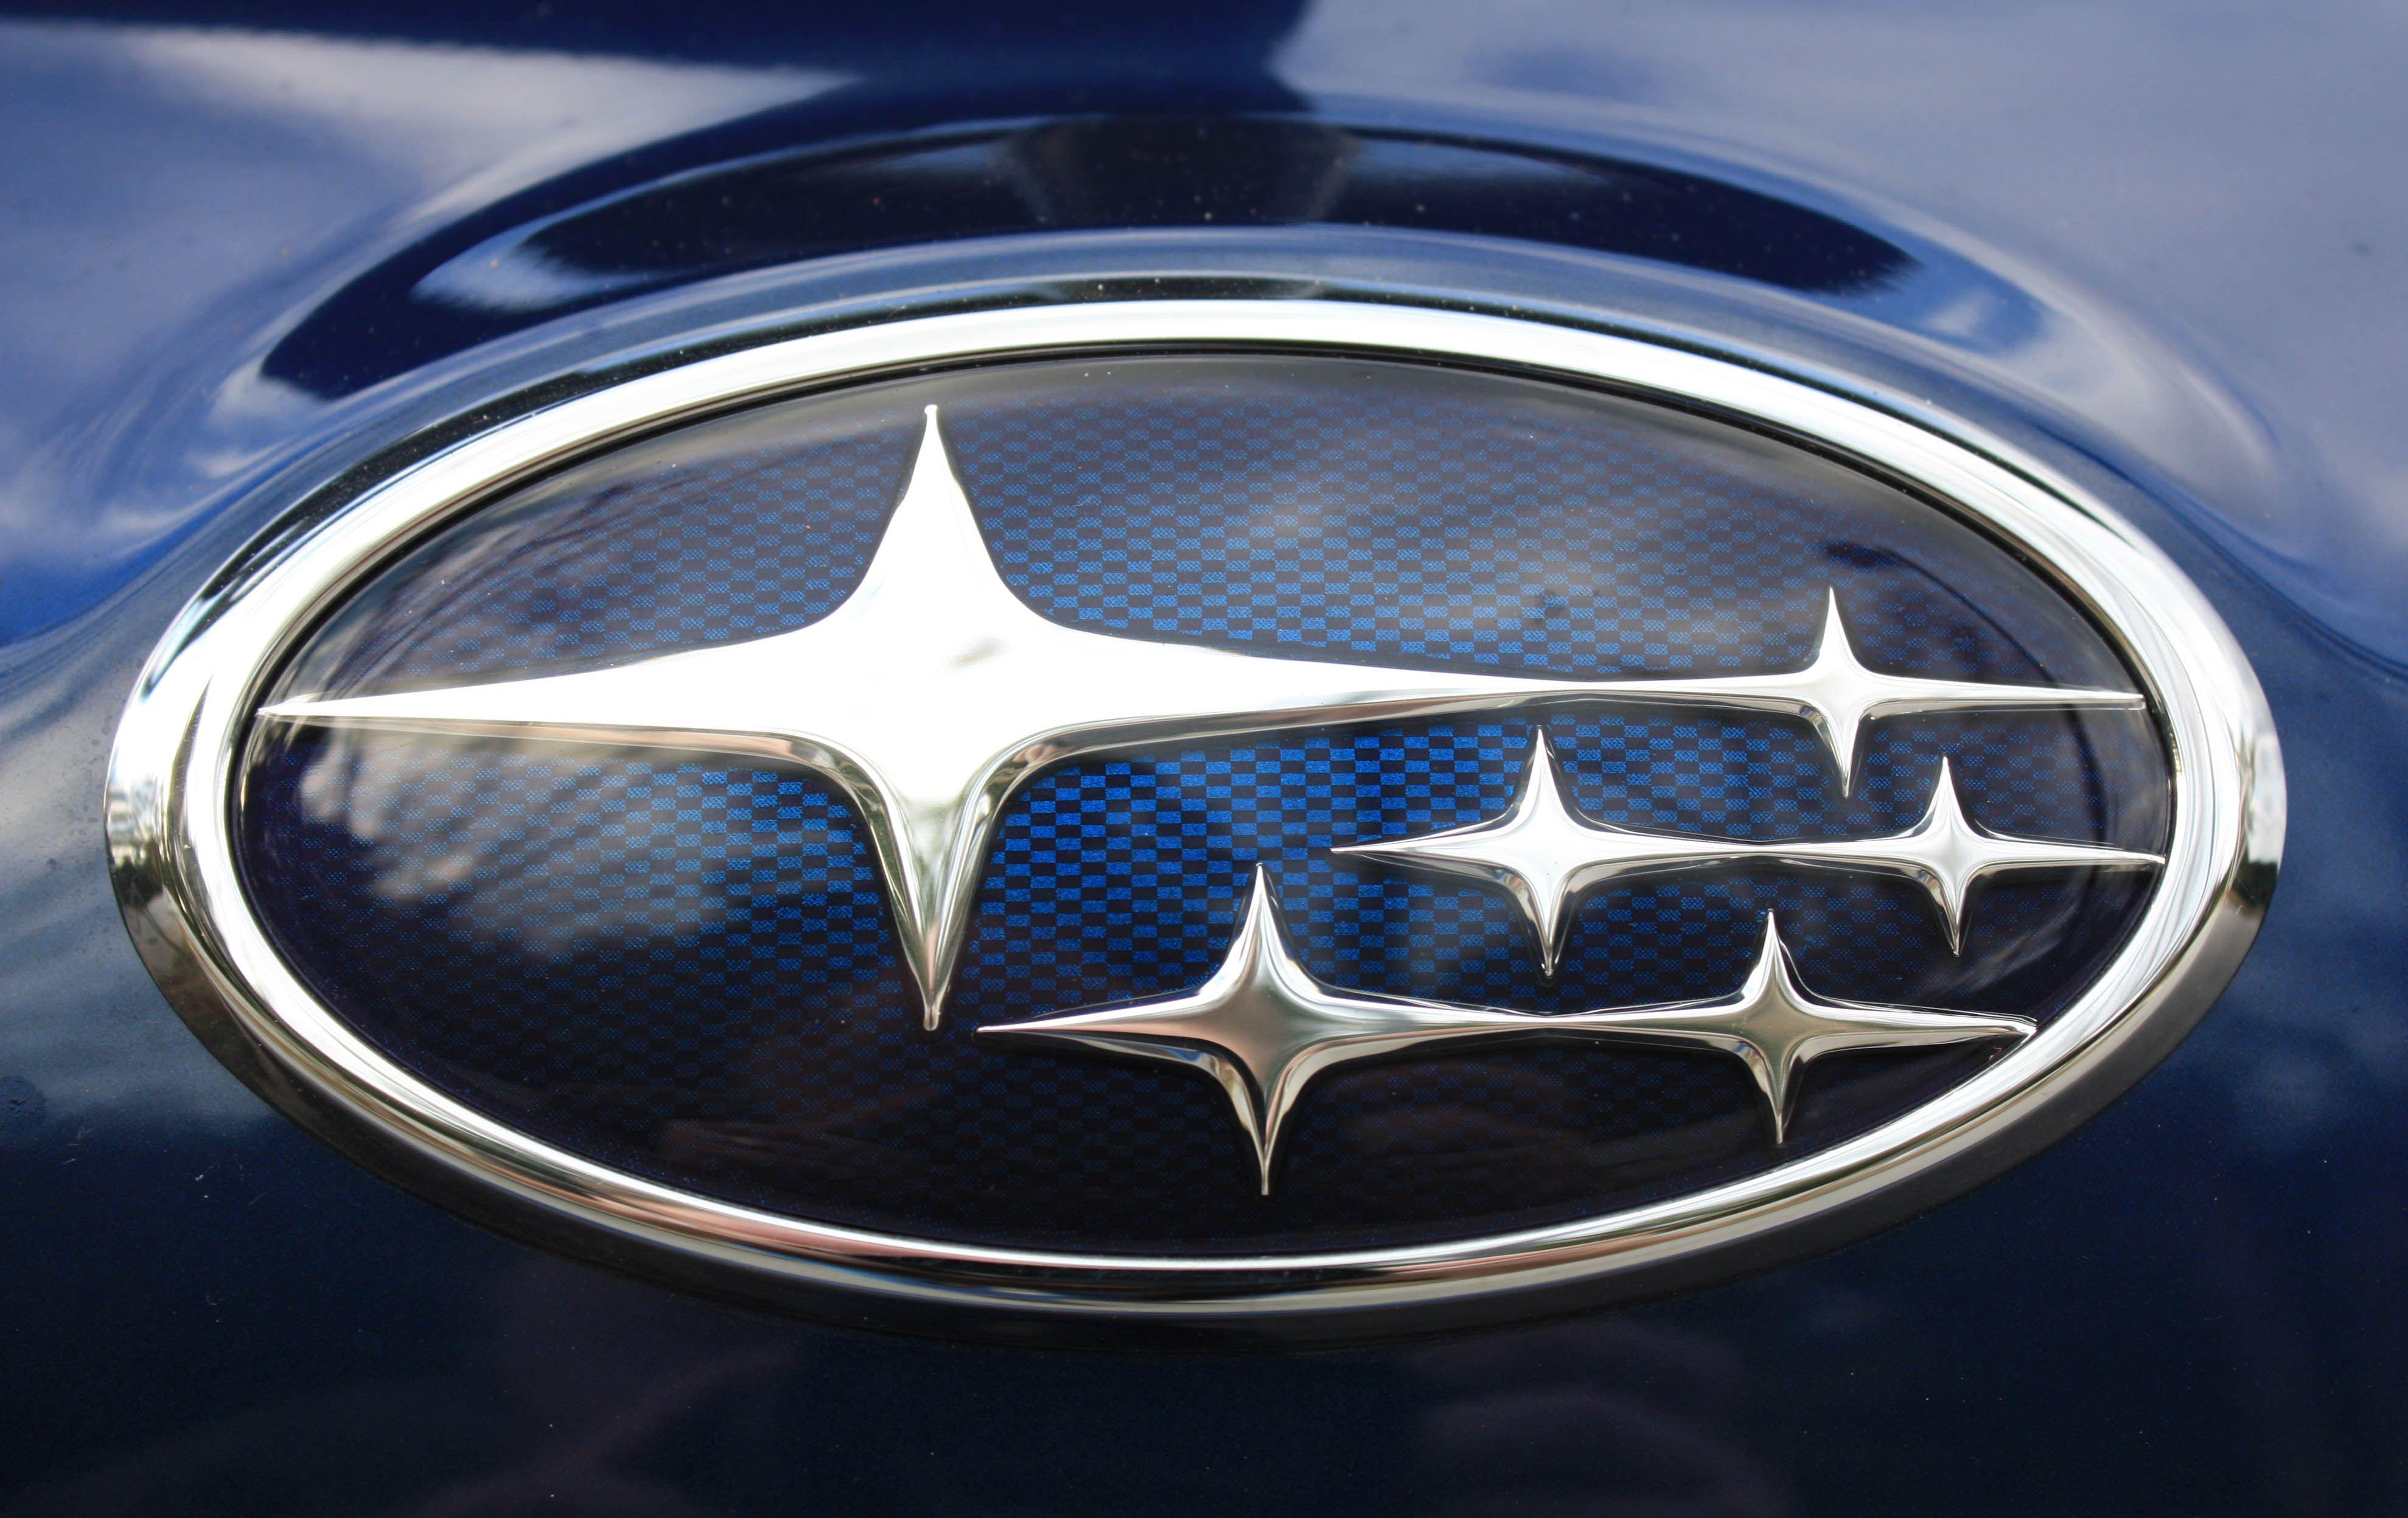 Subaru Stars Logo - Subaru Logo, Subaru Car Symbol Meaning and History | Car Brand Names.com